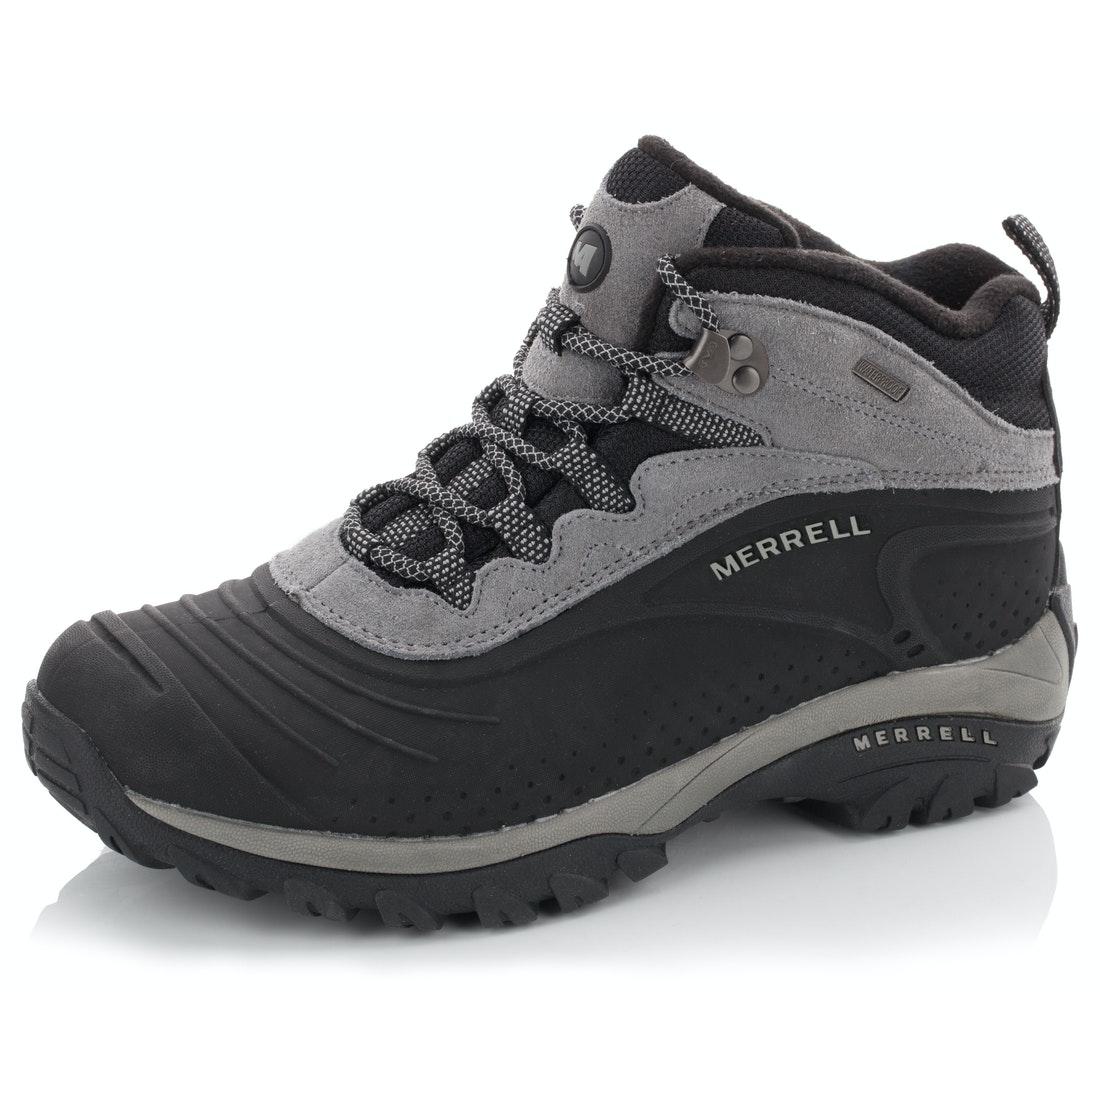 Мерелл мужские обувь. Ботинки Merrell Storm Trekker 6 w. Ботинки Merrell Storm Trekker. J164500c ботинки Merrell. Merrell Storm Trekker 6 серые.